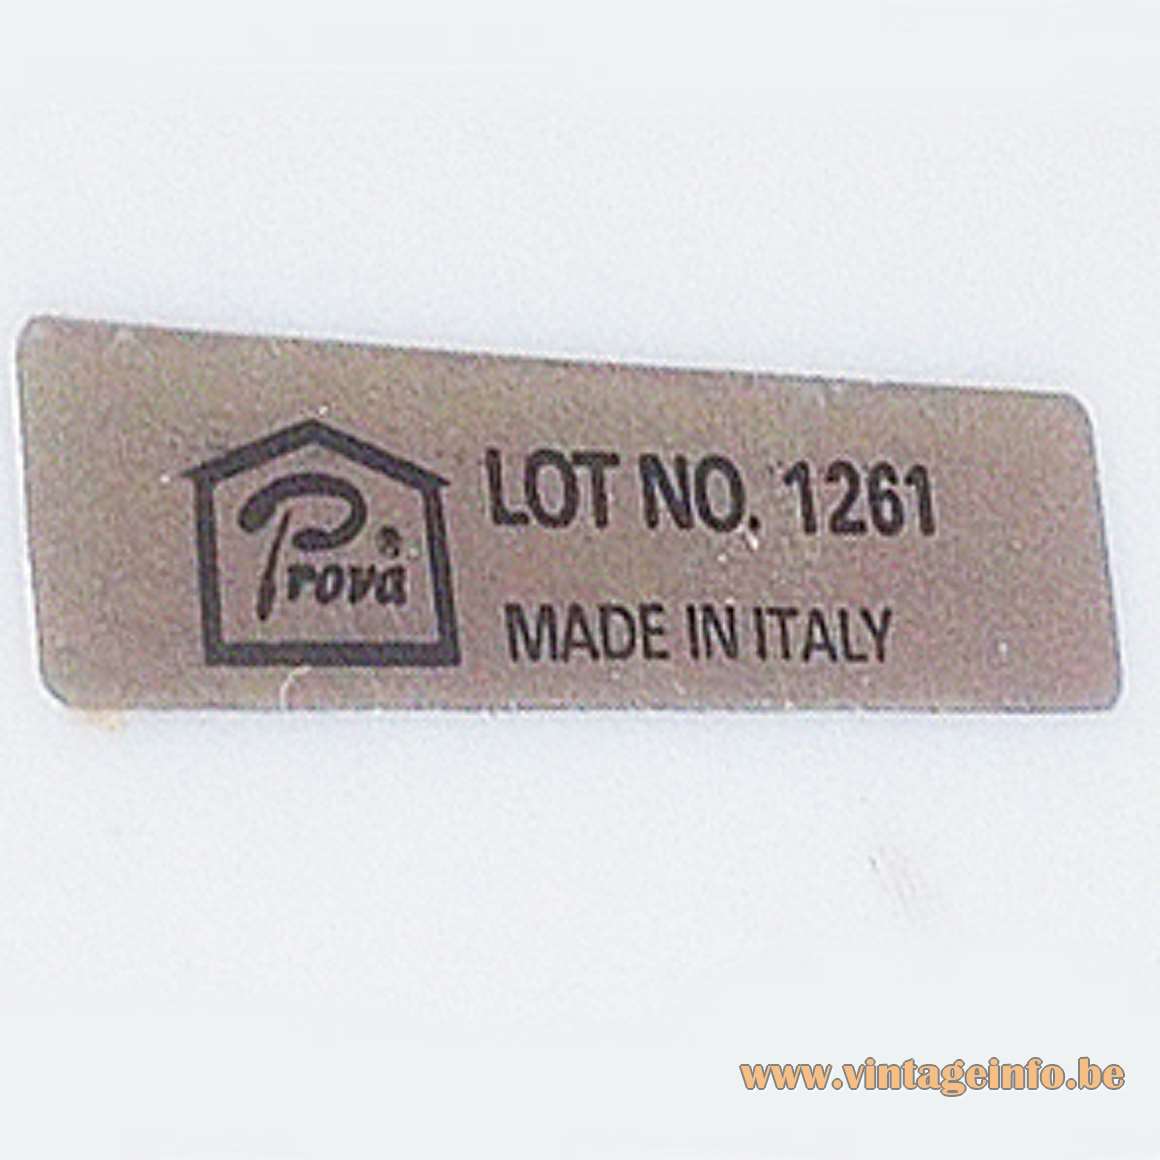 Prova - Made in Italy - Label